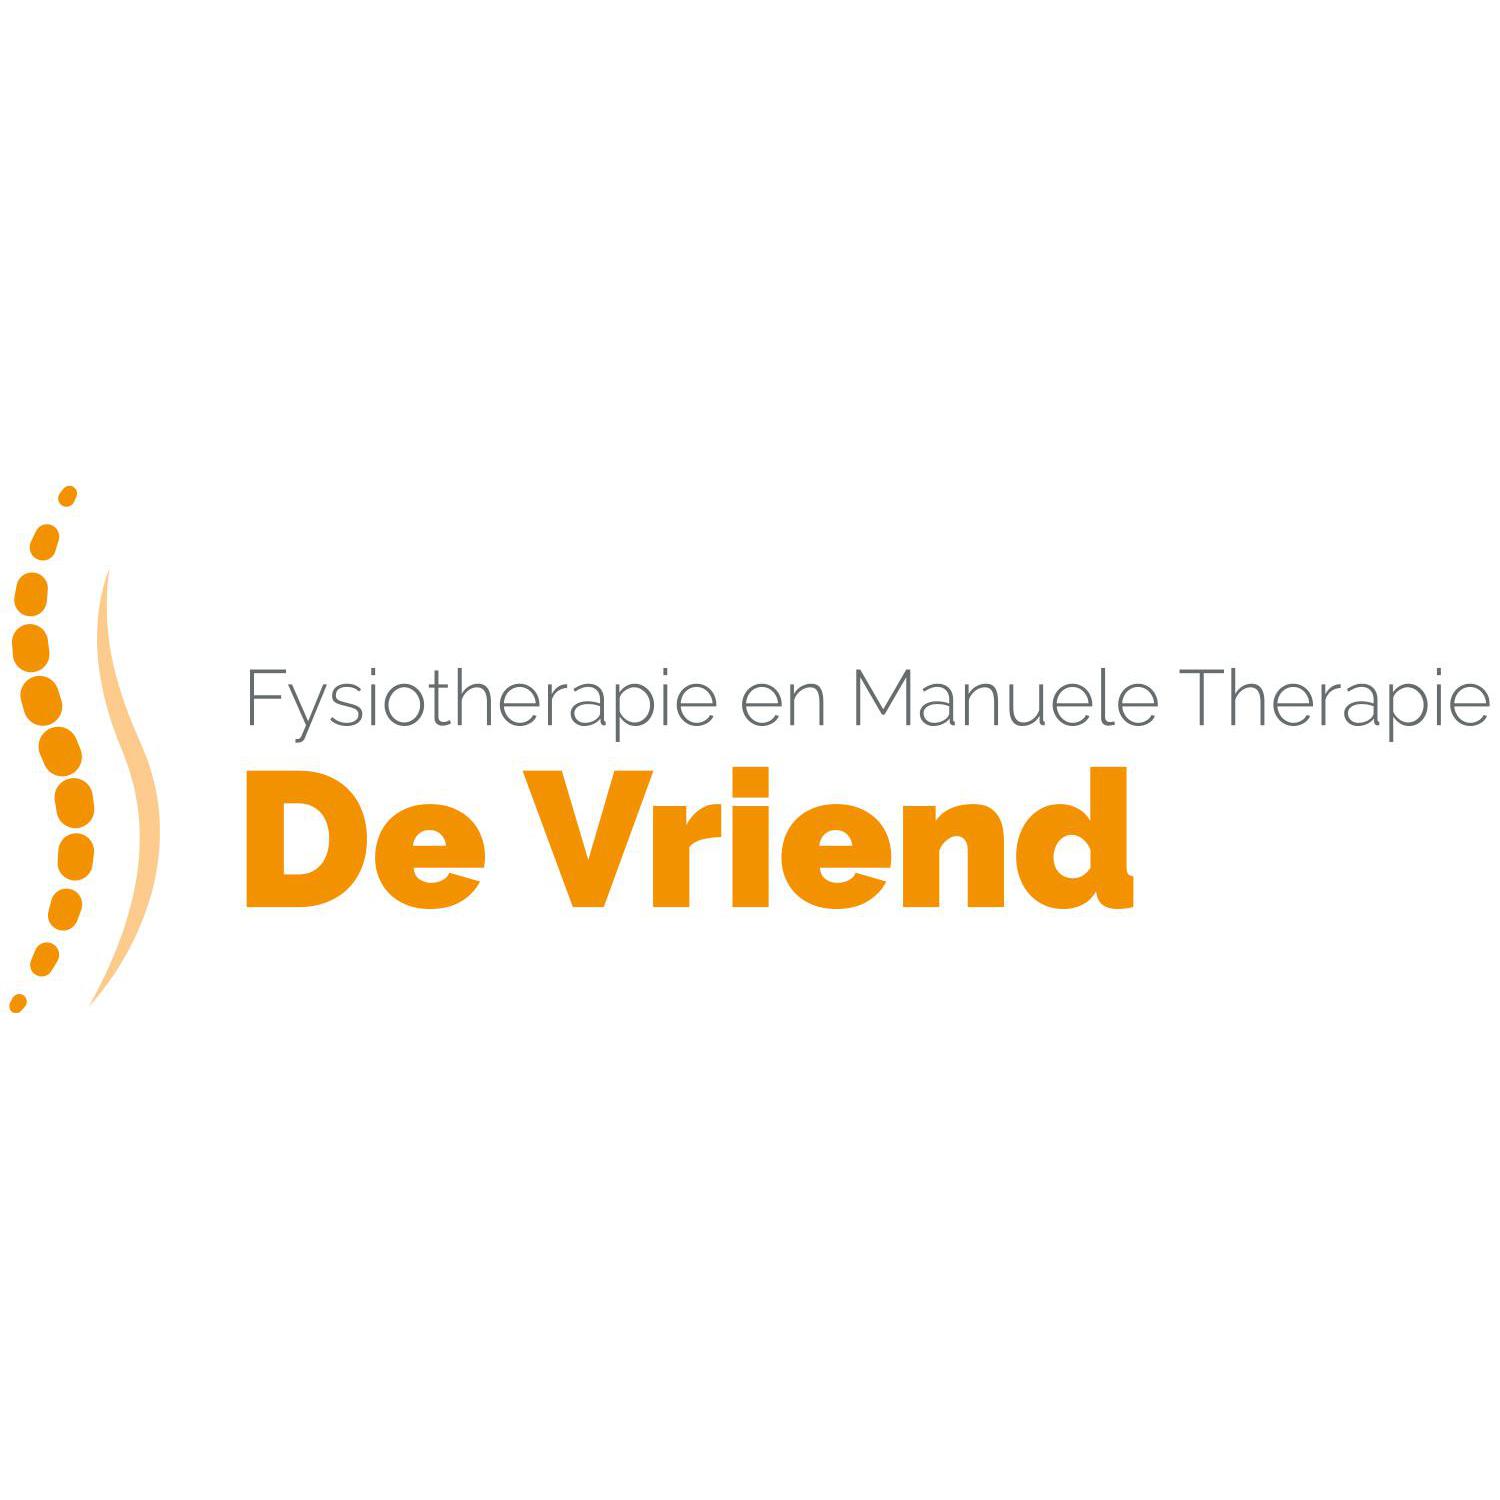 Fysiotherapie en Manuele Therapie De Vriend Logo